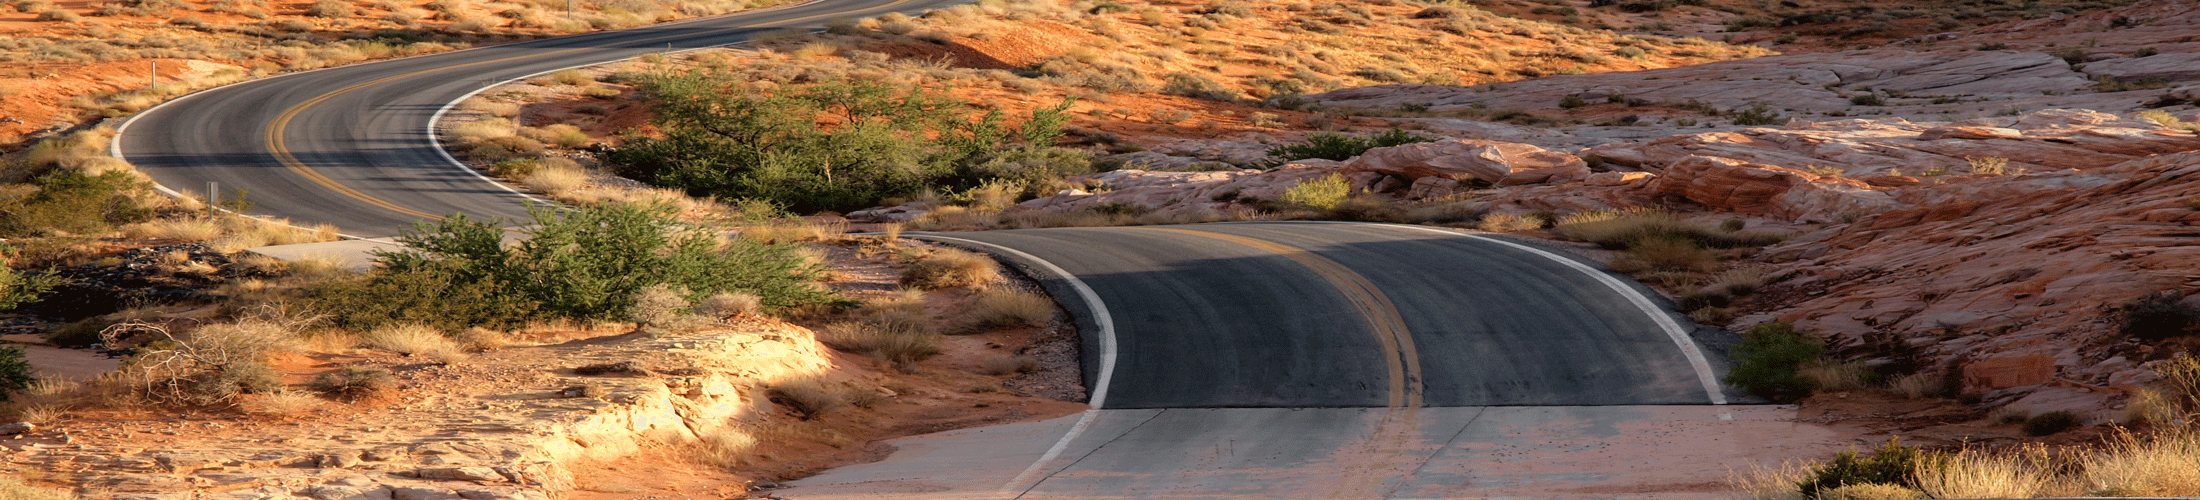 Winding road in desert